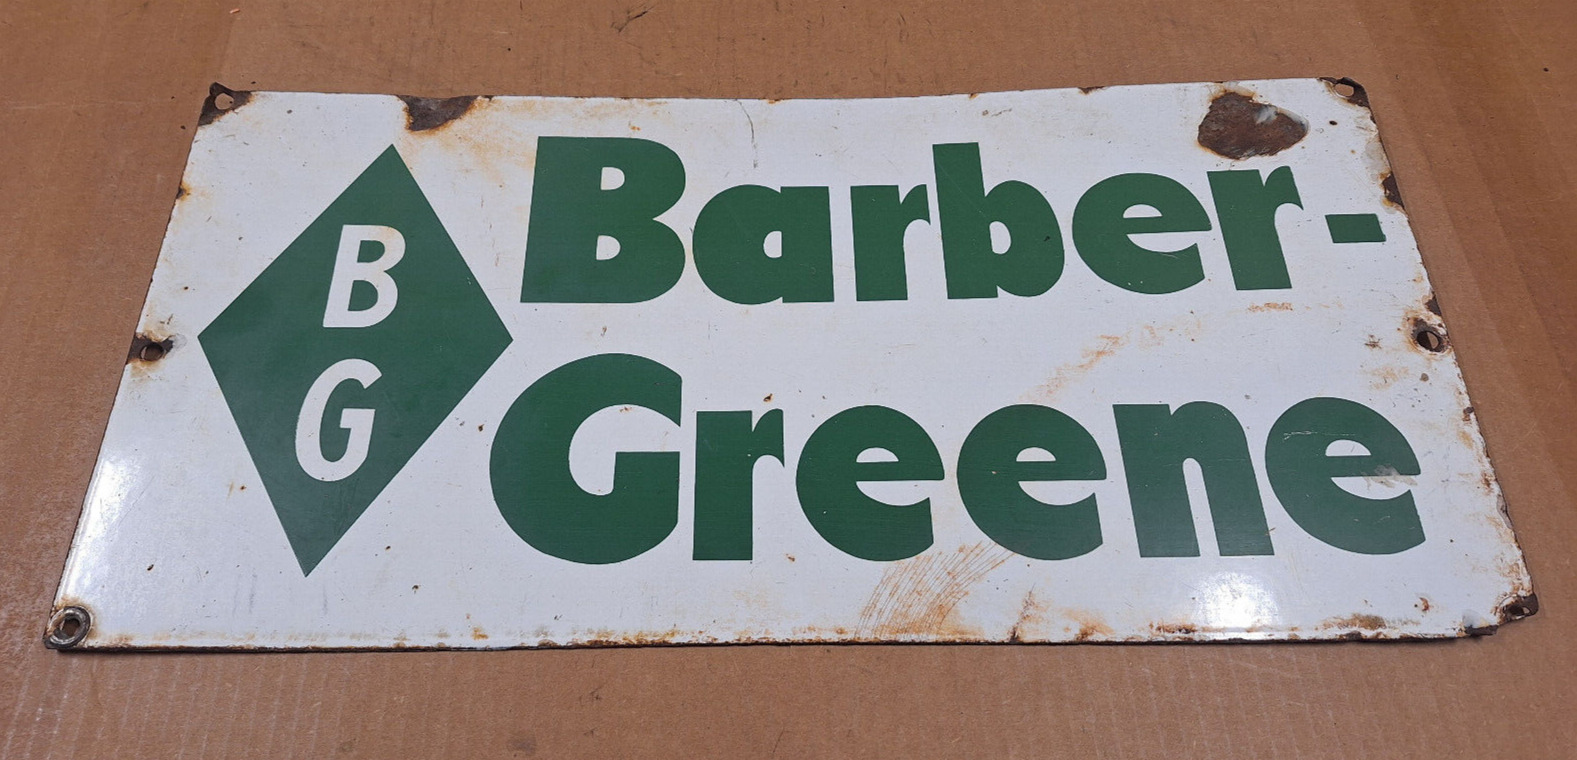 Barber Greene Porcelain Sign Construction Equipment Aurora Illinois